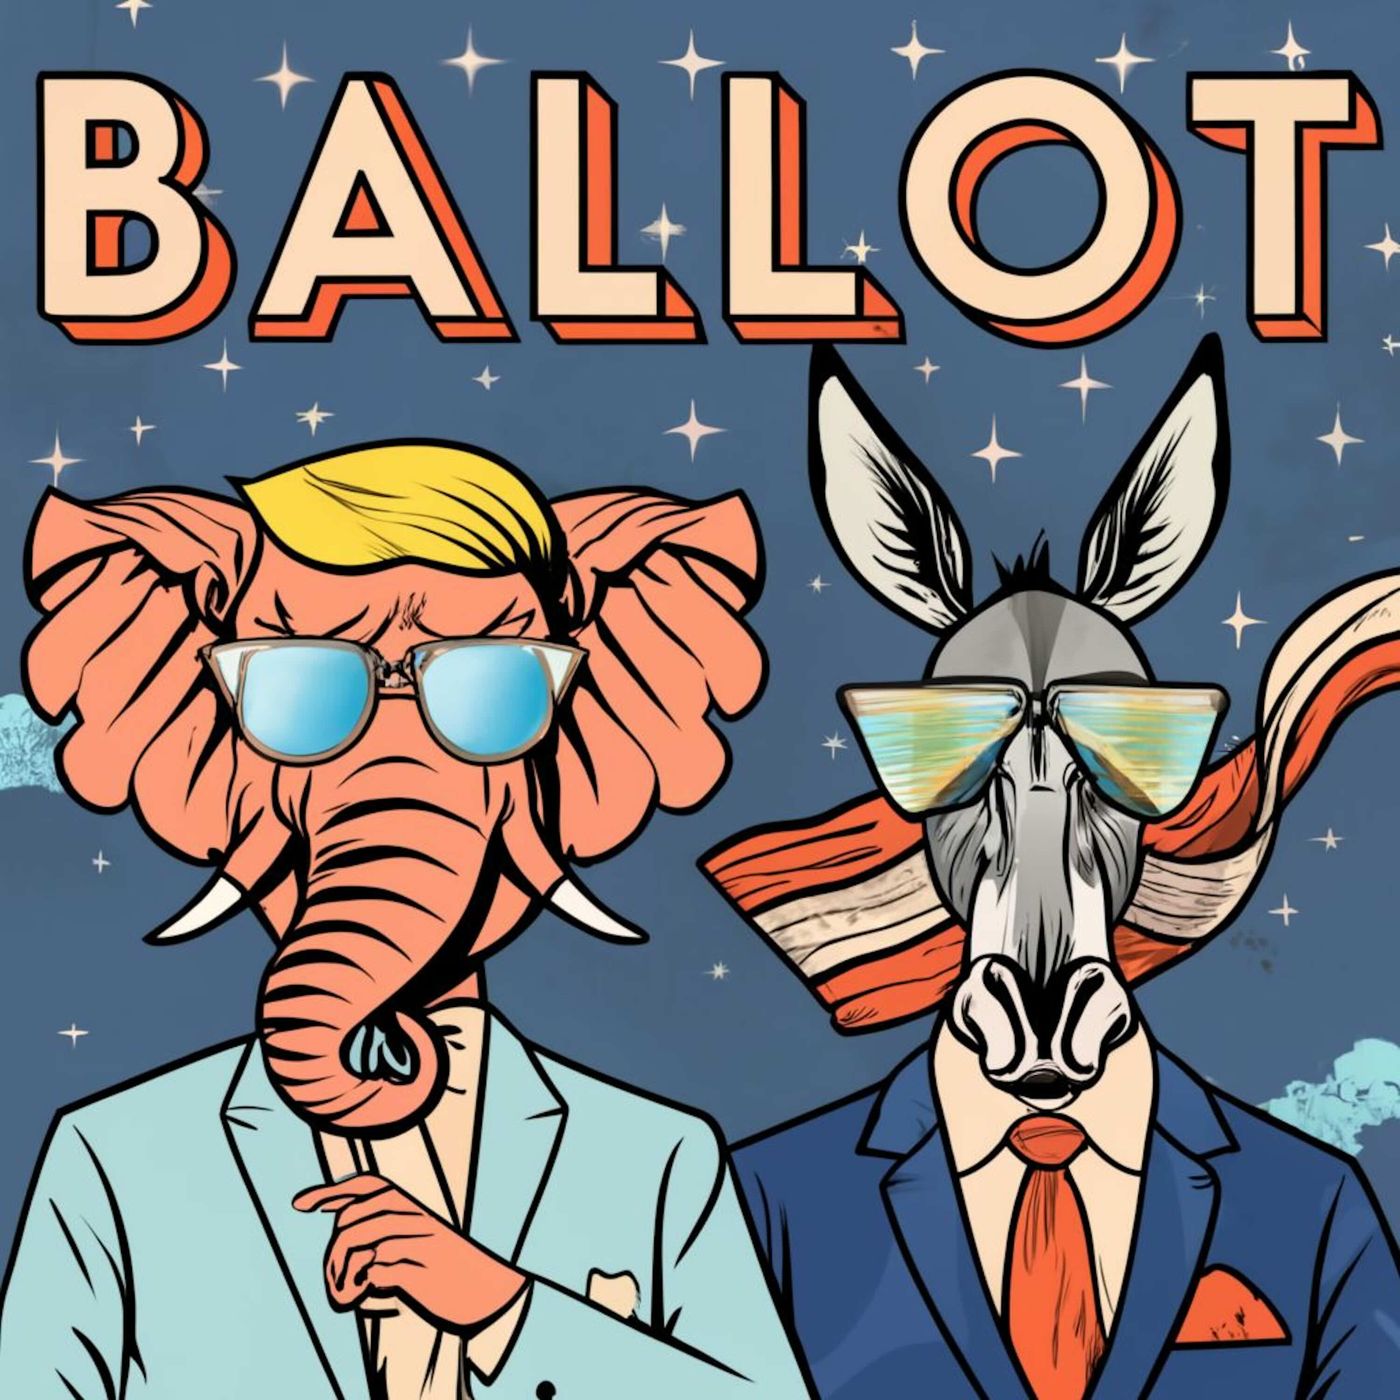 Ballot : Politics but fun